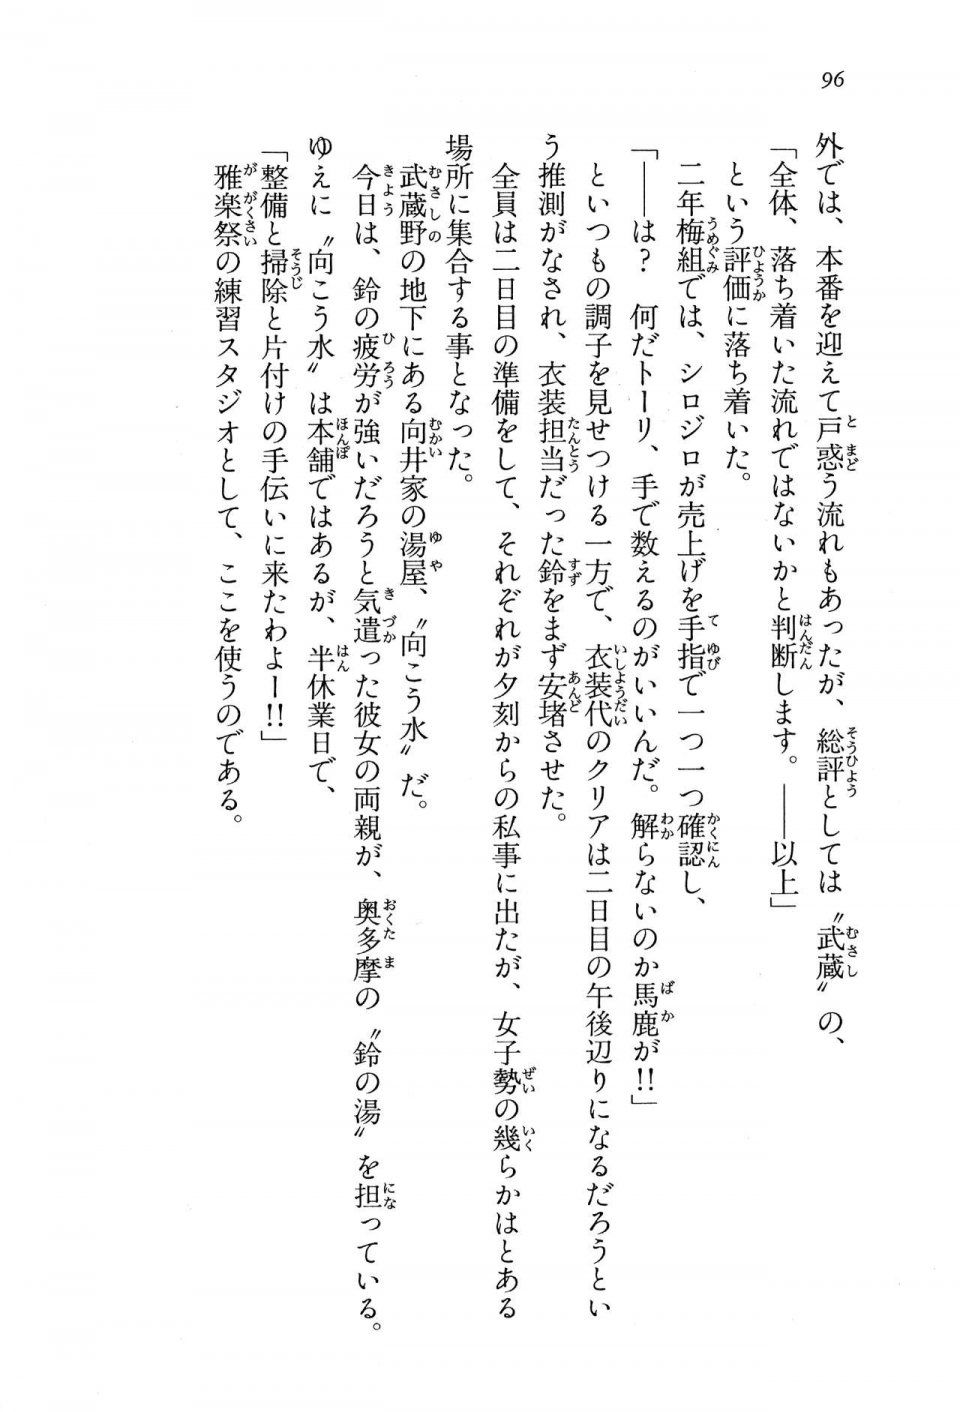 Kyoukai Senjou no Horizon BD Special Mininovel Vol 8(4B) - Photo #100